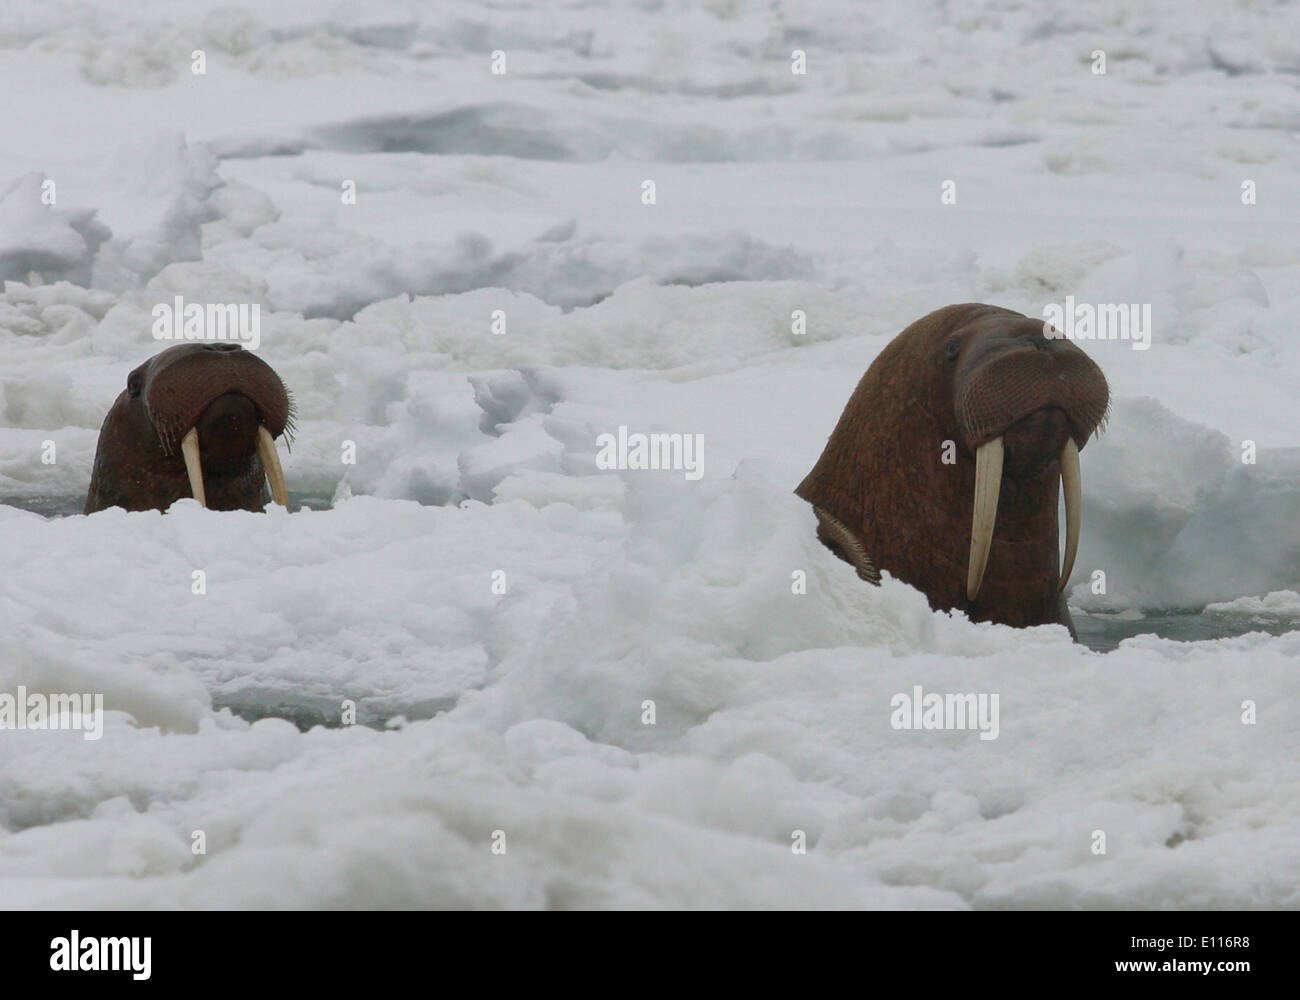 Pacific Walrus Surfacing Through Ice Stock Photo